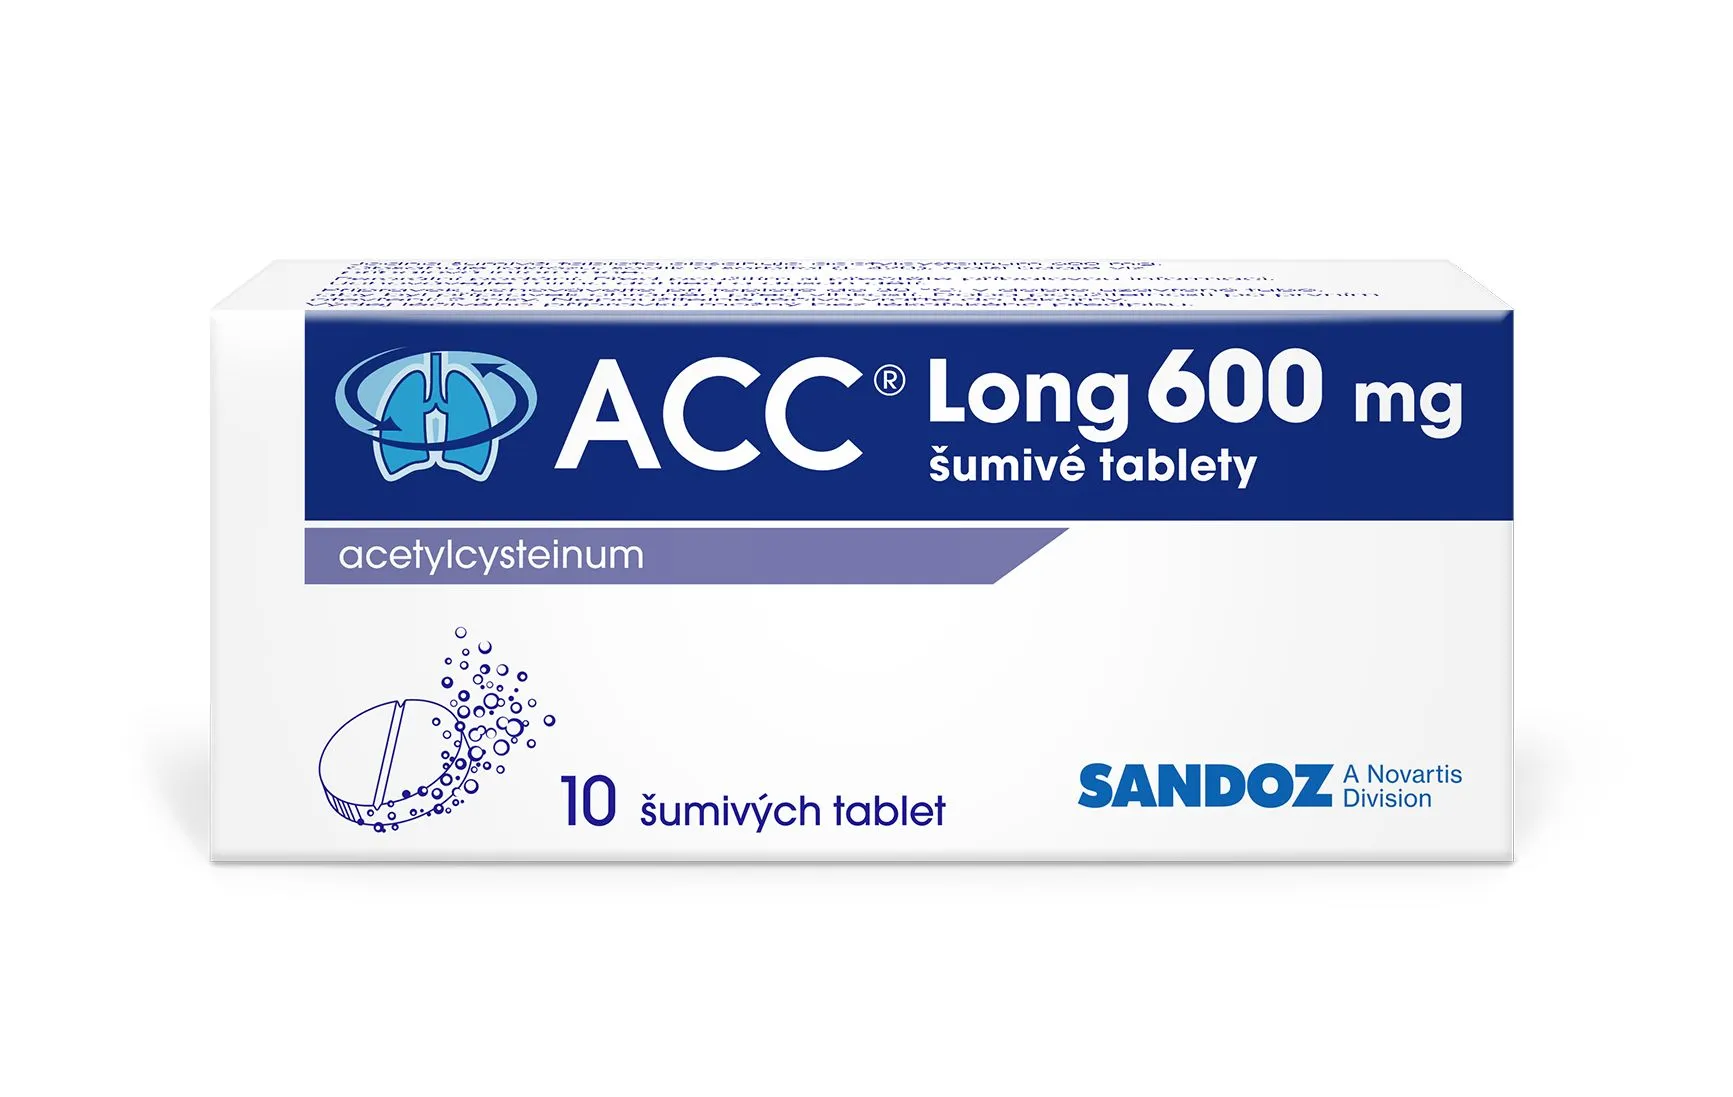 ACC LONG 600 mg